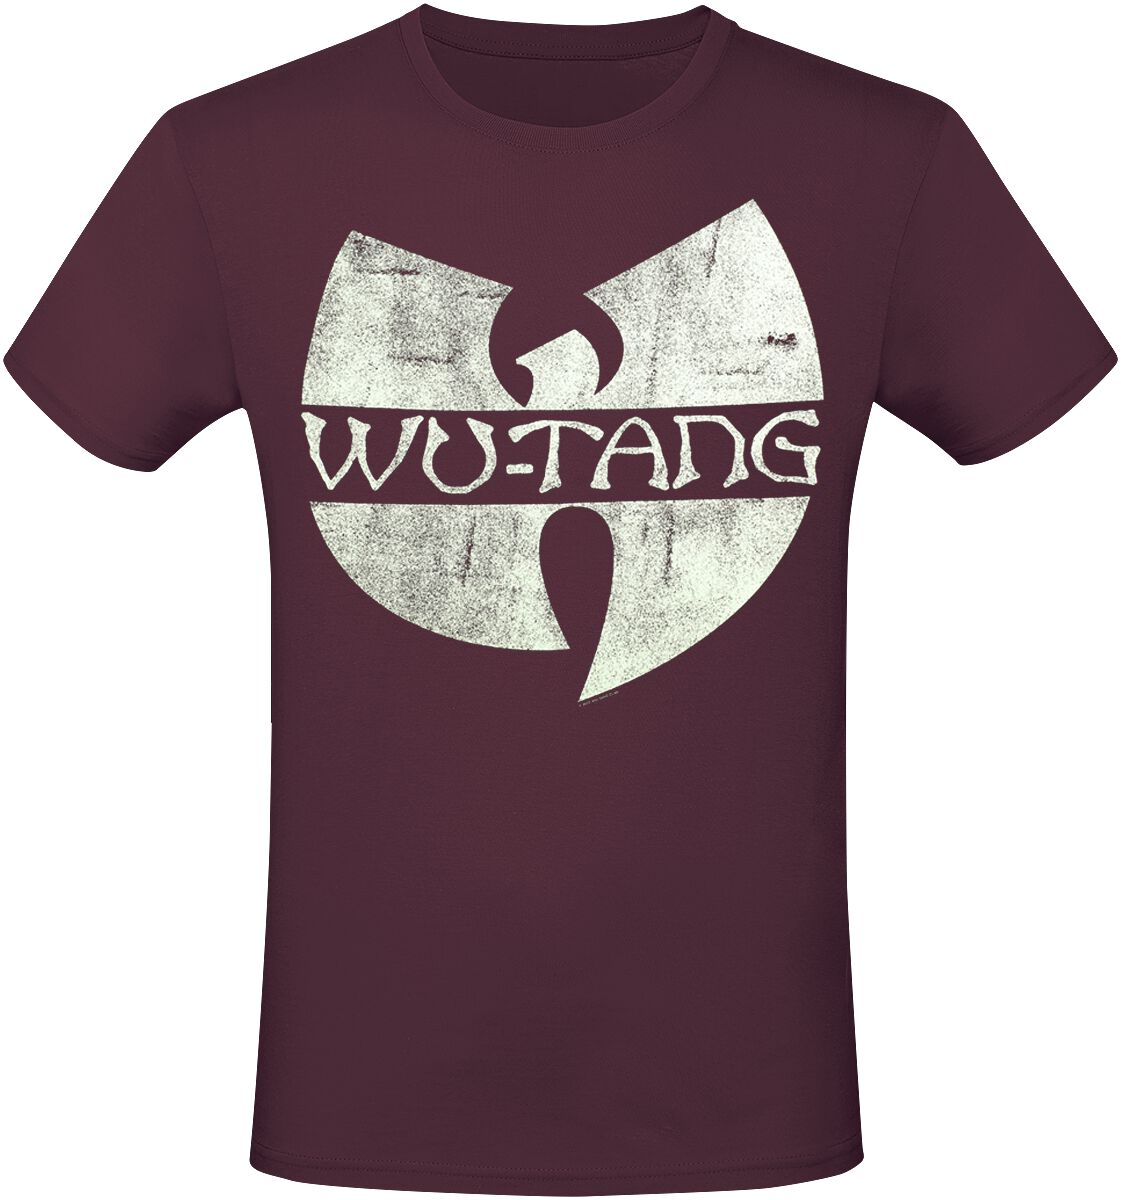 Wu-Tang Clan Logo T-Shirt rot in M